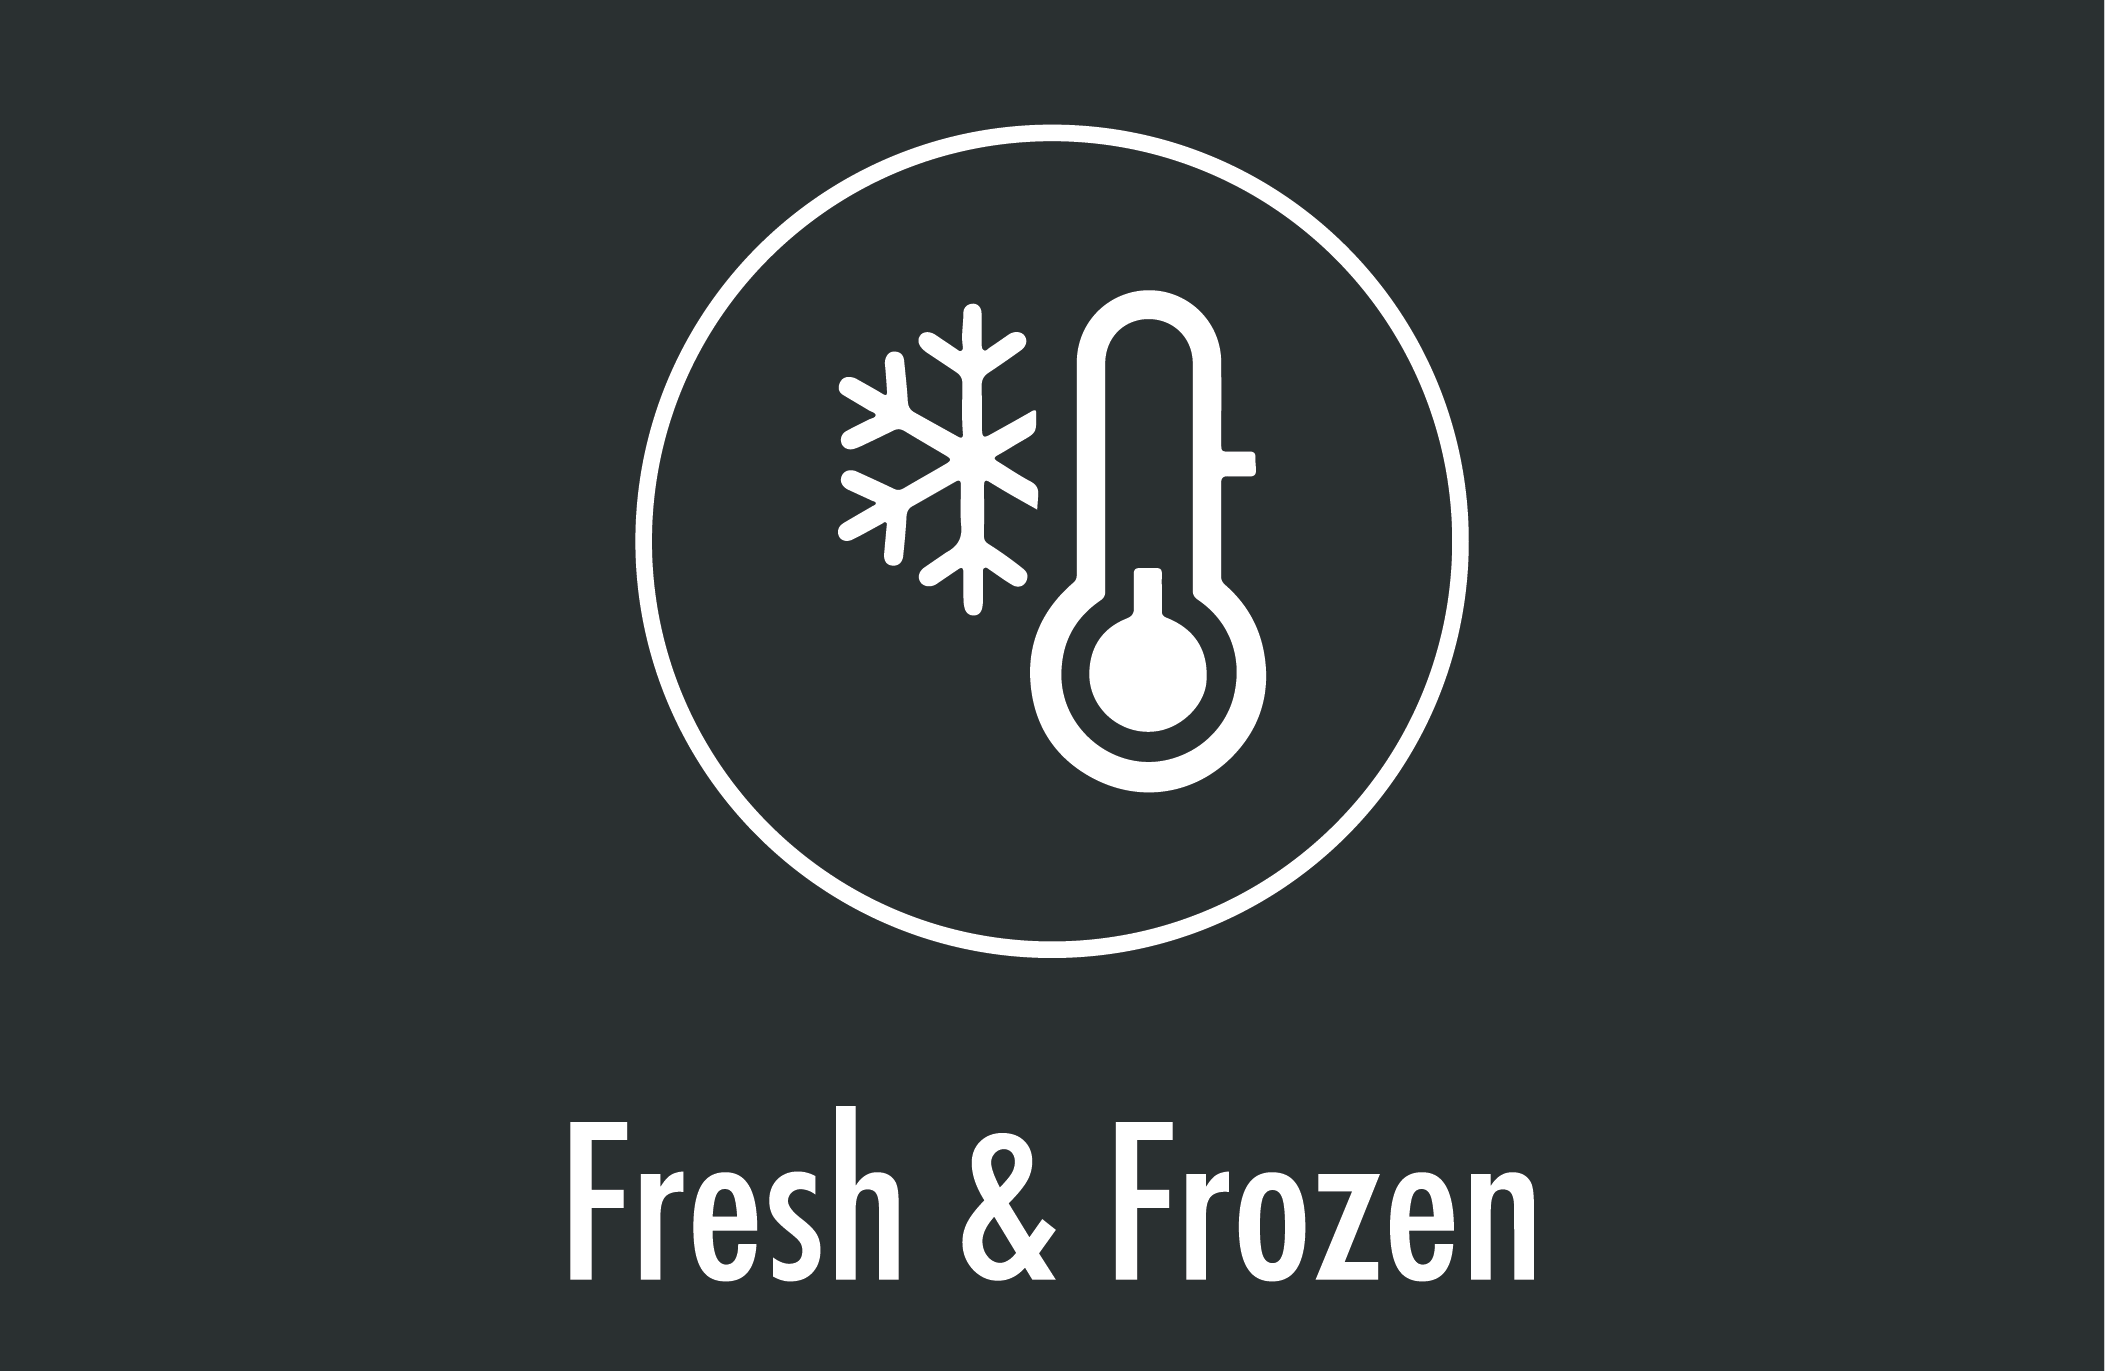 Frozen & Fresh Food